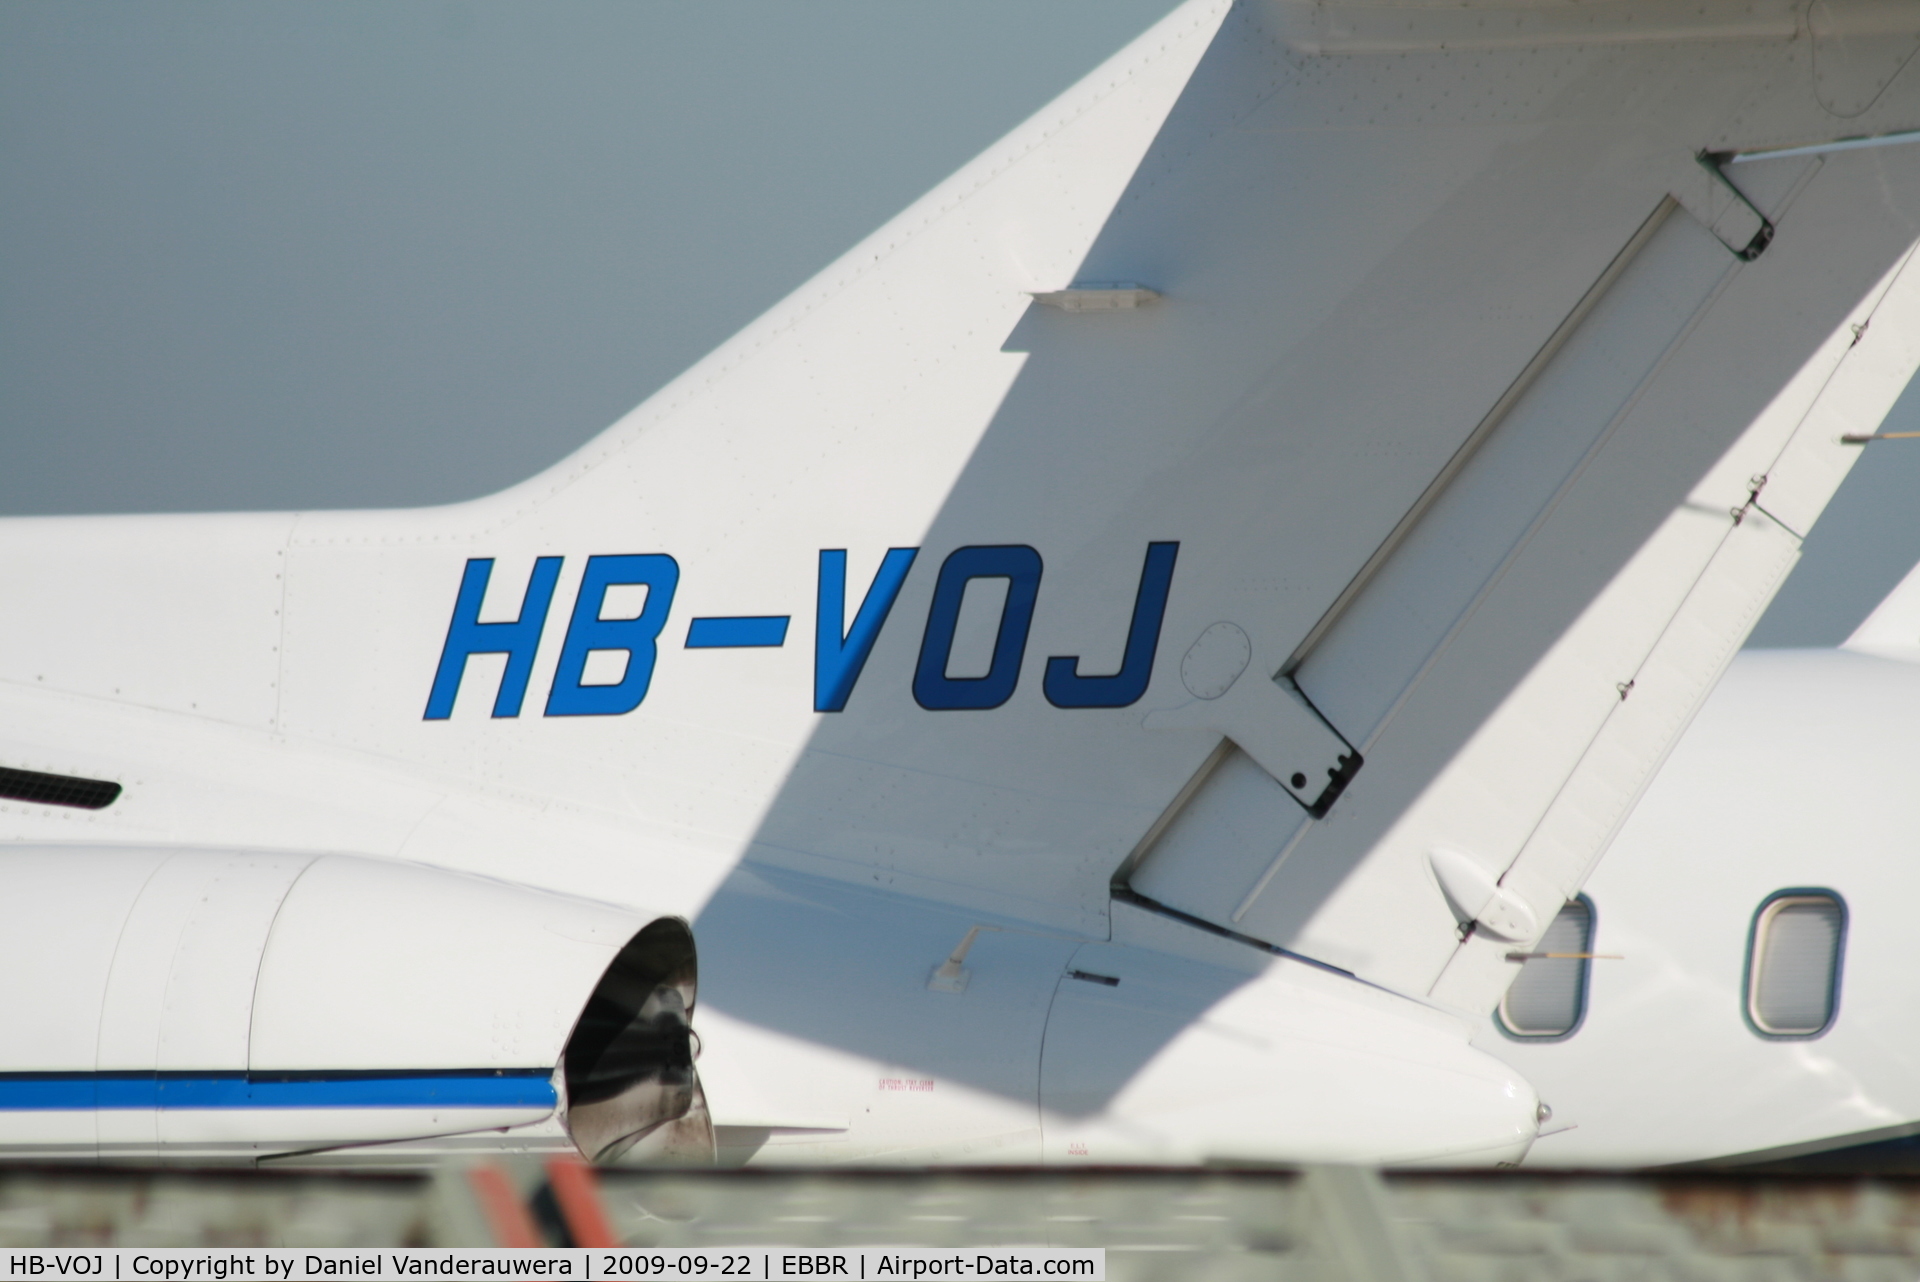 HB-VOJ, 2006 Raytheon Hawker 850XP C/N 258799, parked on General Aviation apron